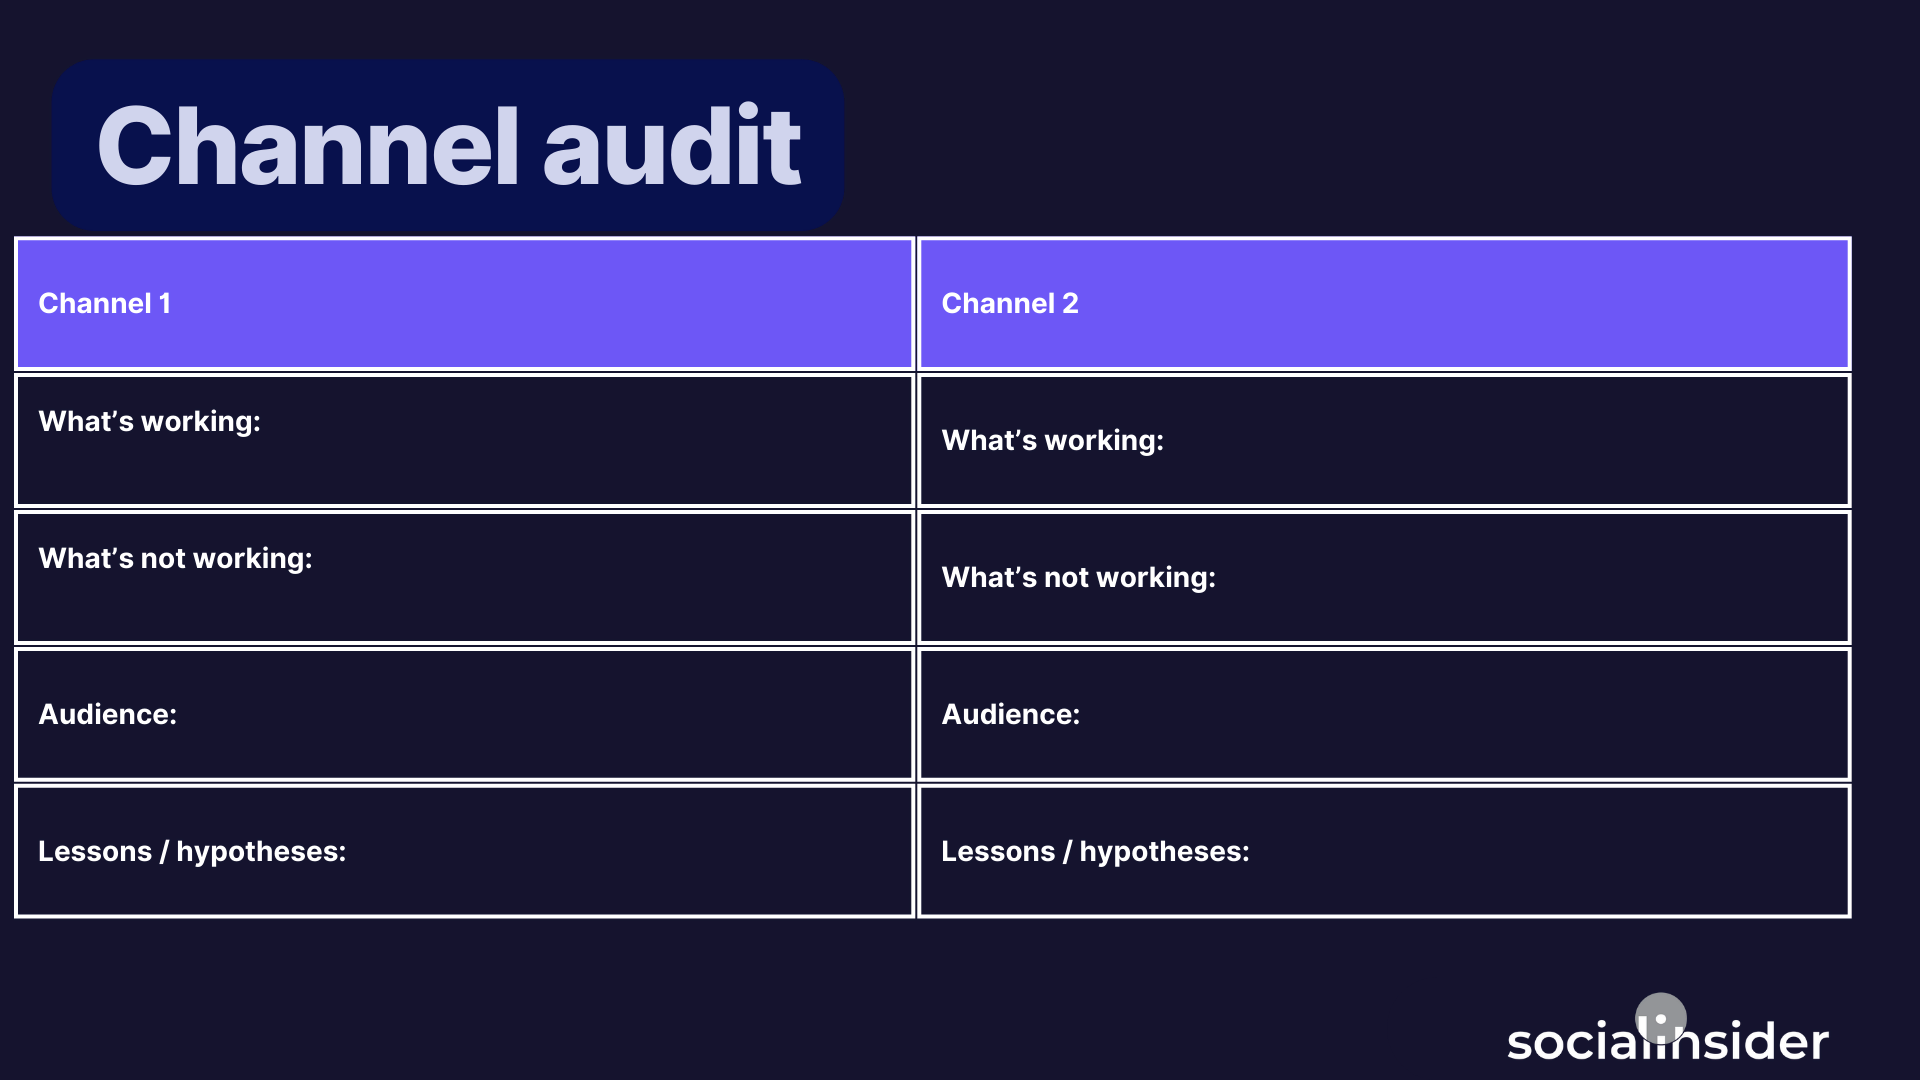 social media audit template